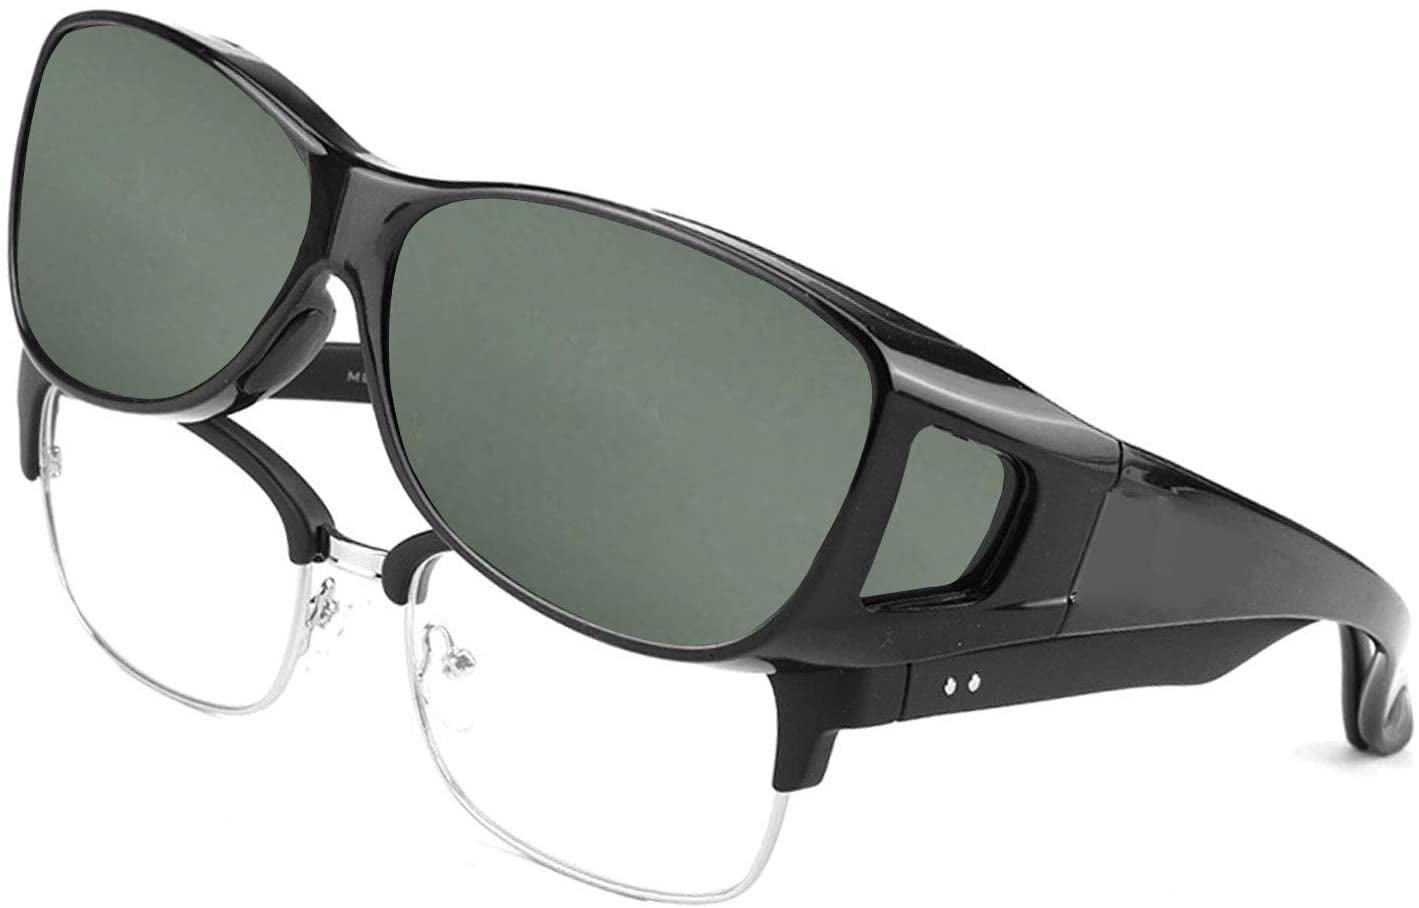 Over Glasses Sunglasses Polarized for Men Women/Sunglasses Wear Over/fit Over Prescription Glasses UV400 Outdoor Sports Driving Sunglasses 